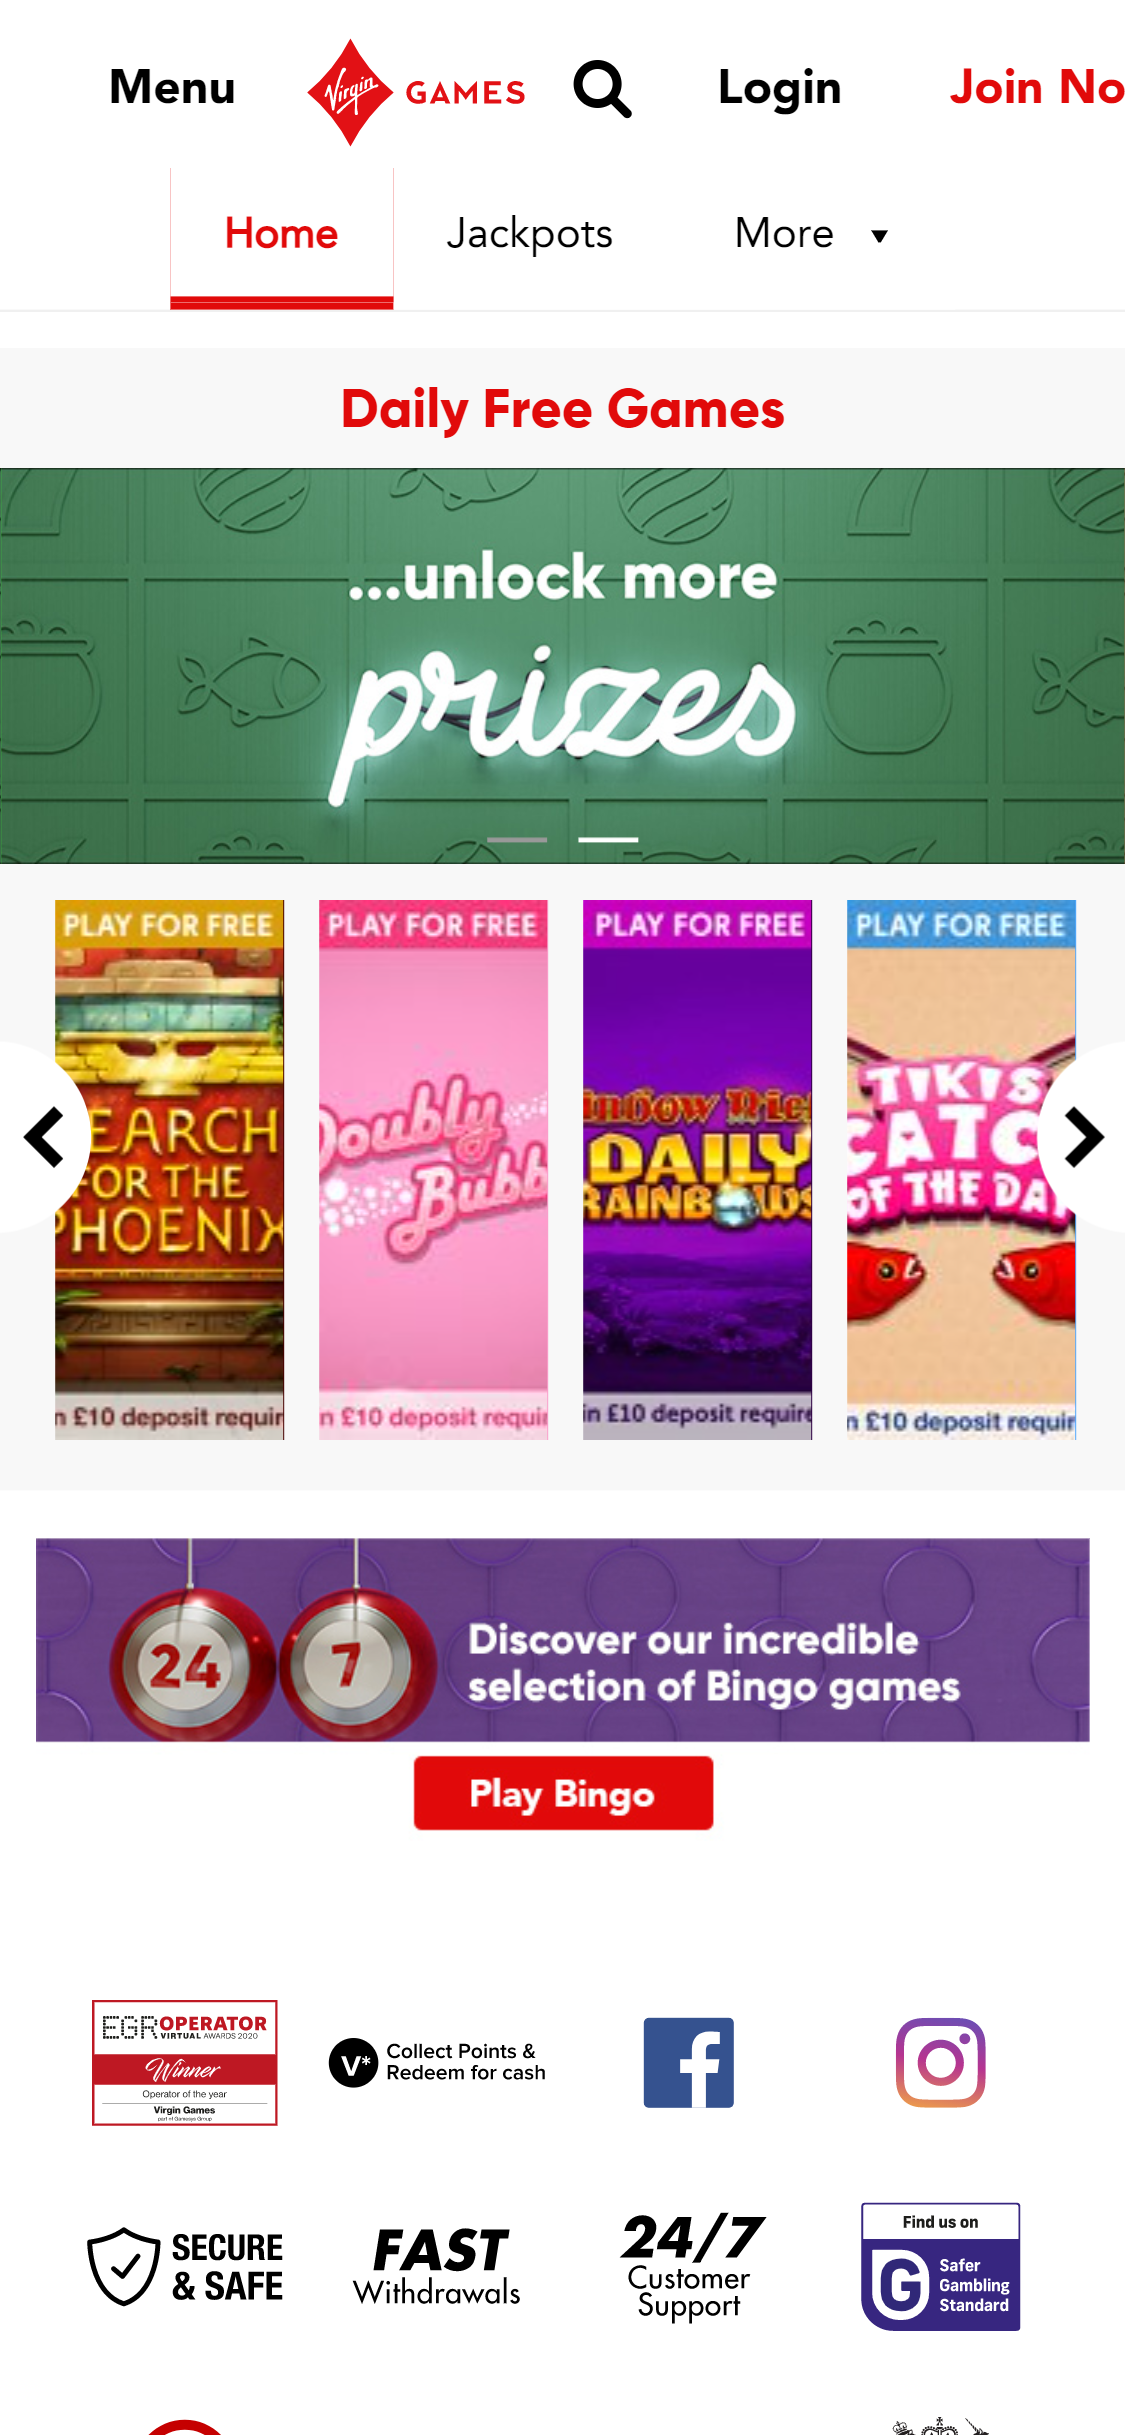 Virgin Games Casino Mobile Games Review